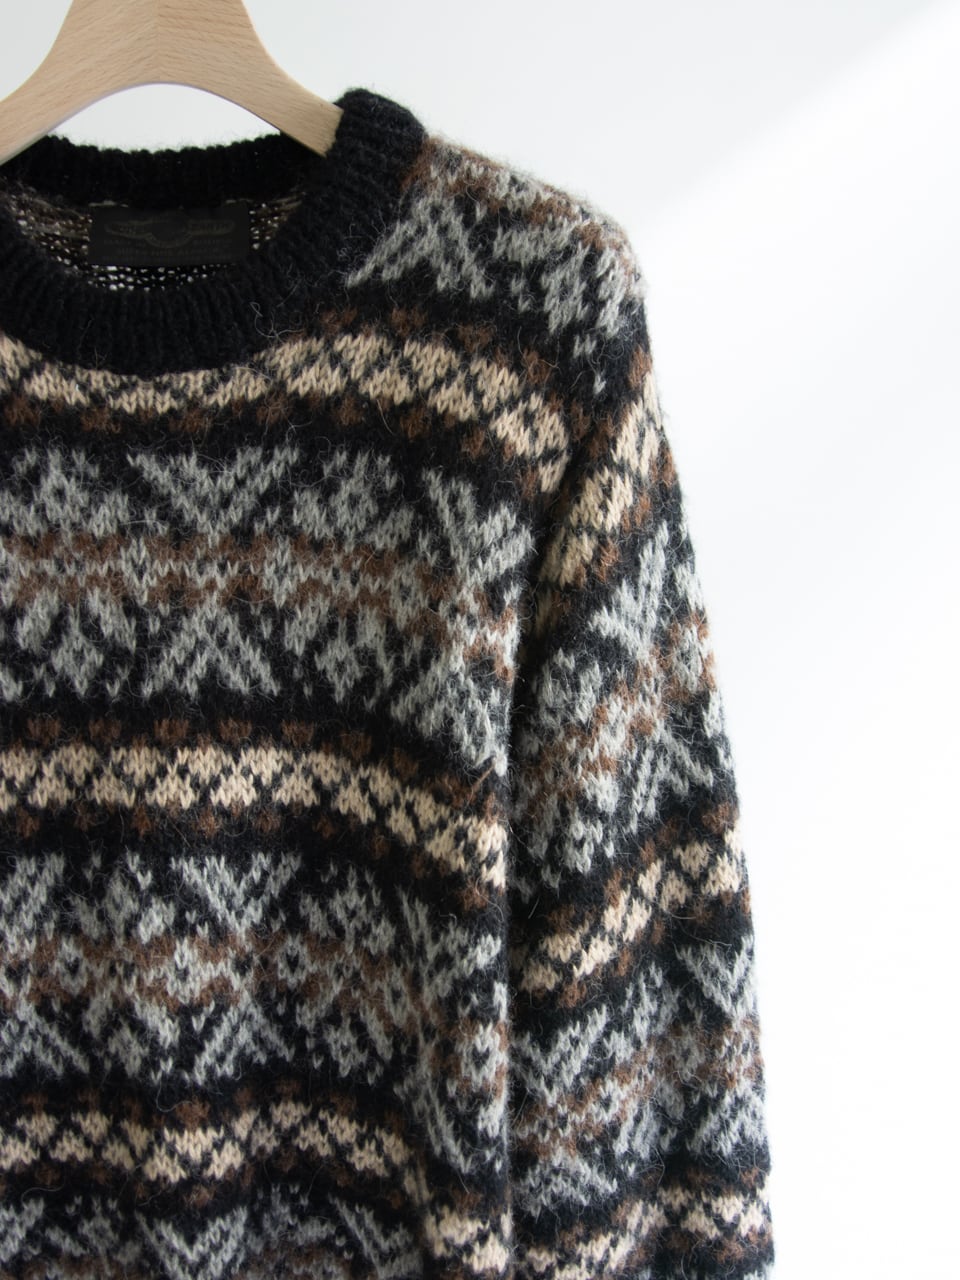 Made in Bolivia】100% Alpaca sweater（ボリビア製 アルパカセーター 